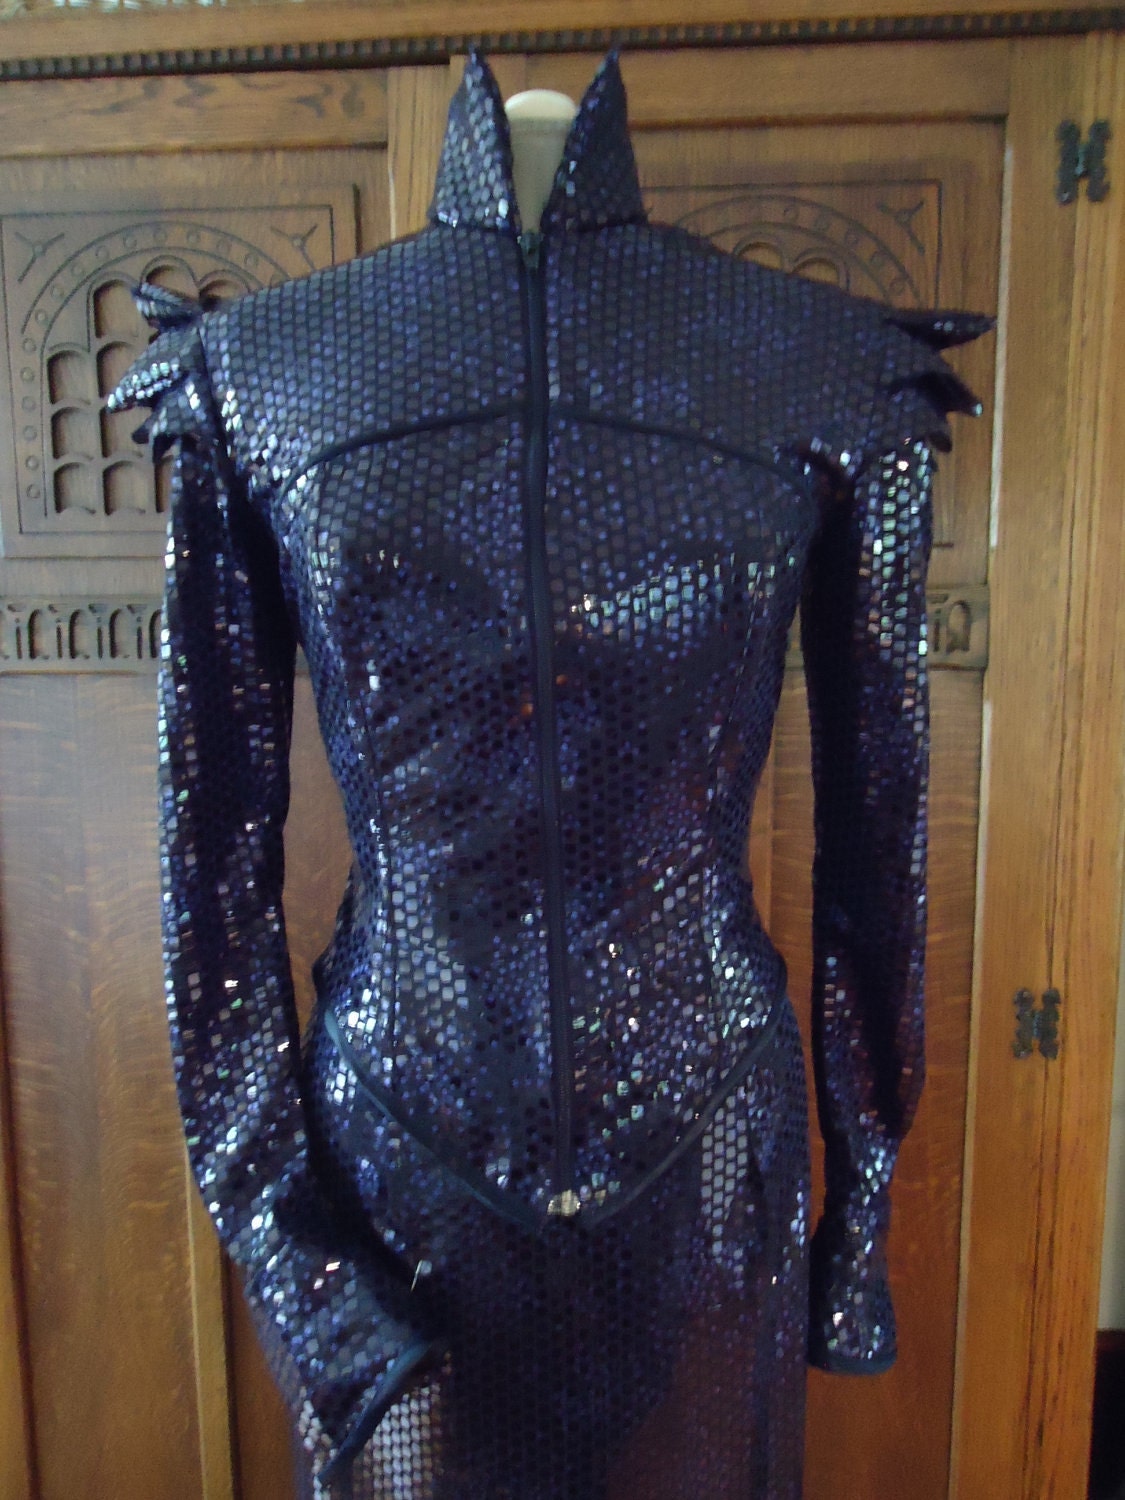 The Hunger Games Katniss Everdeen 'Girl on Fire' costume zipper jacket and skirt blue black vinyl size M